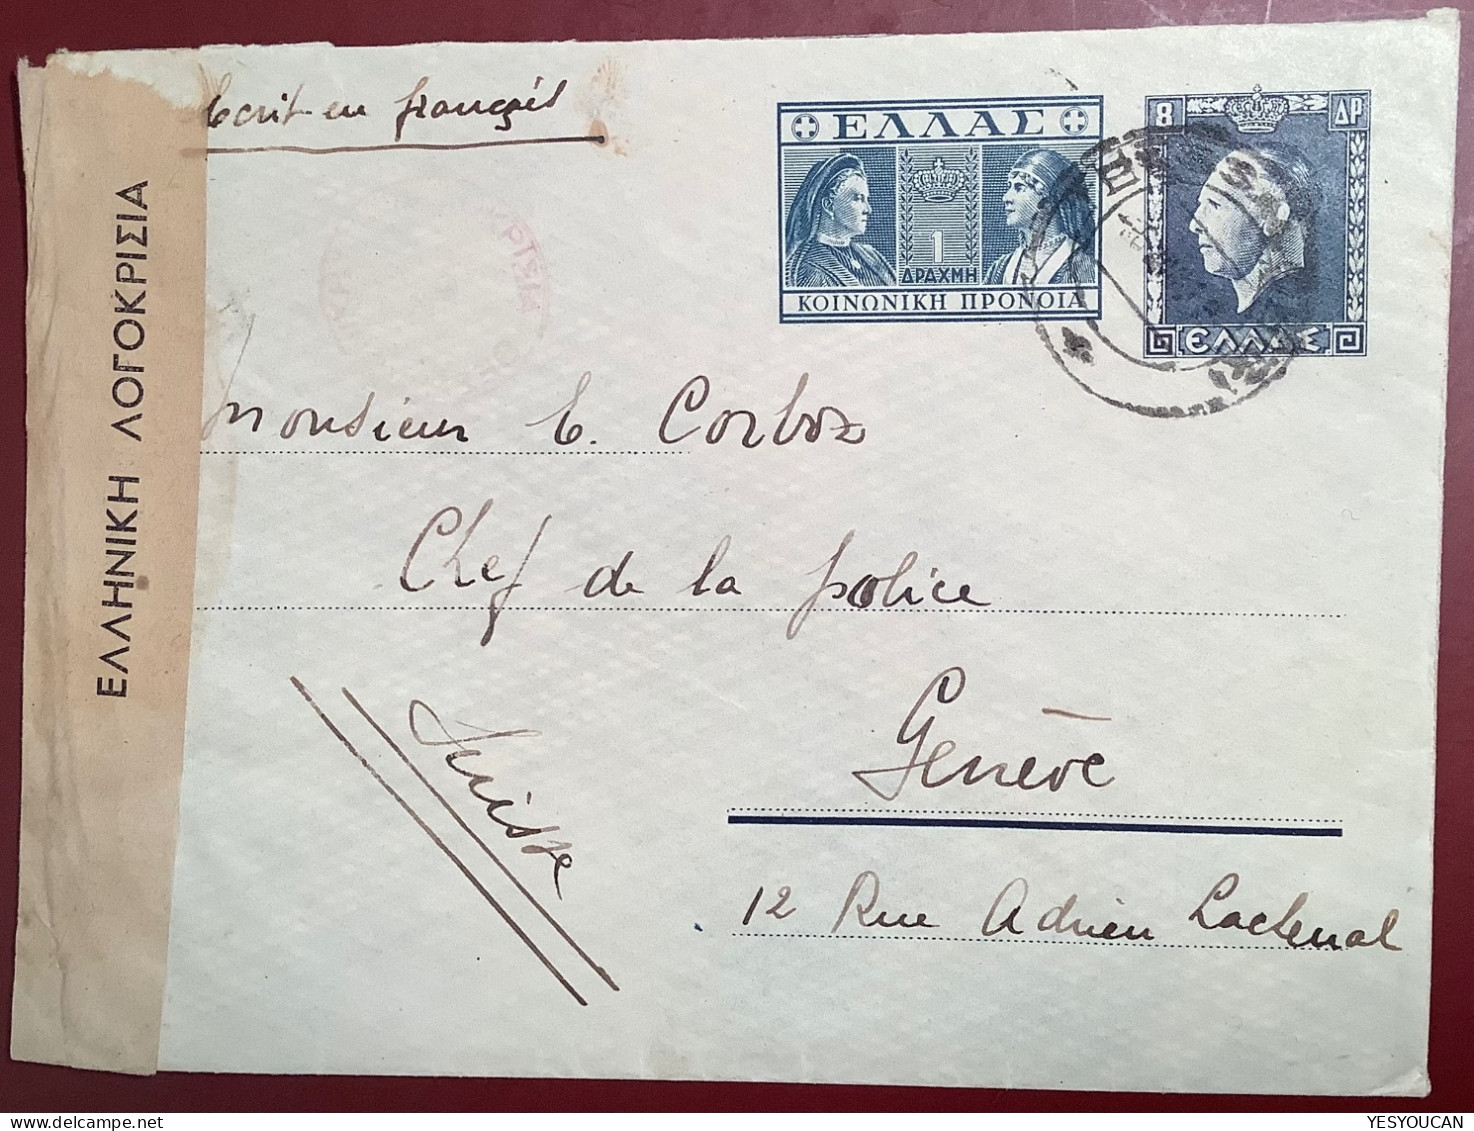 Greece 1939 1dr+8dr Postal Stationery Envelope Mi. U5 Censored Thessaloniki>E.Corboz, Chef Police Genève Suisse (WW2 - Entiers Postaux